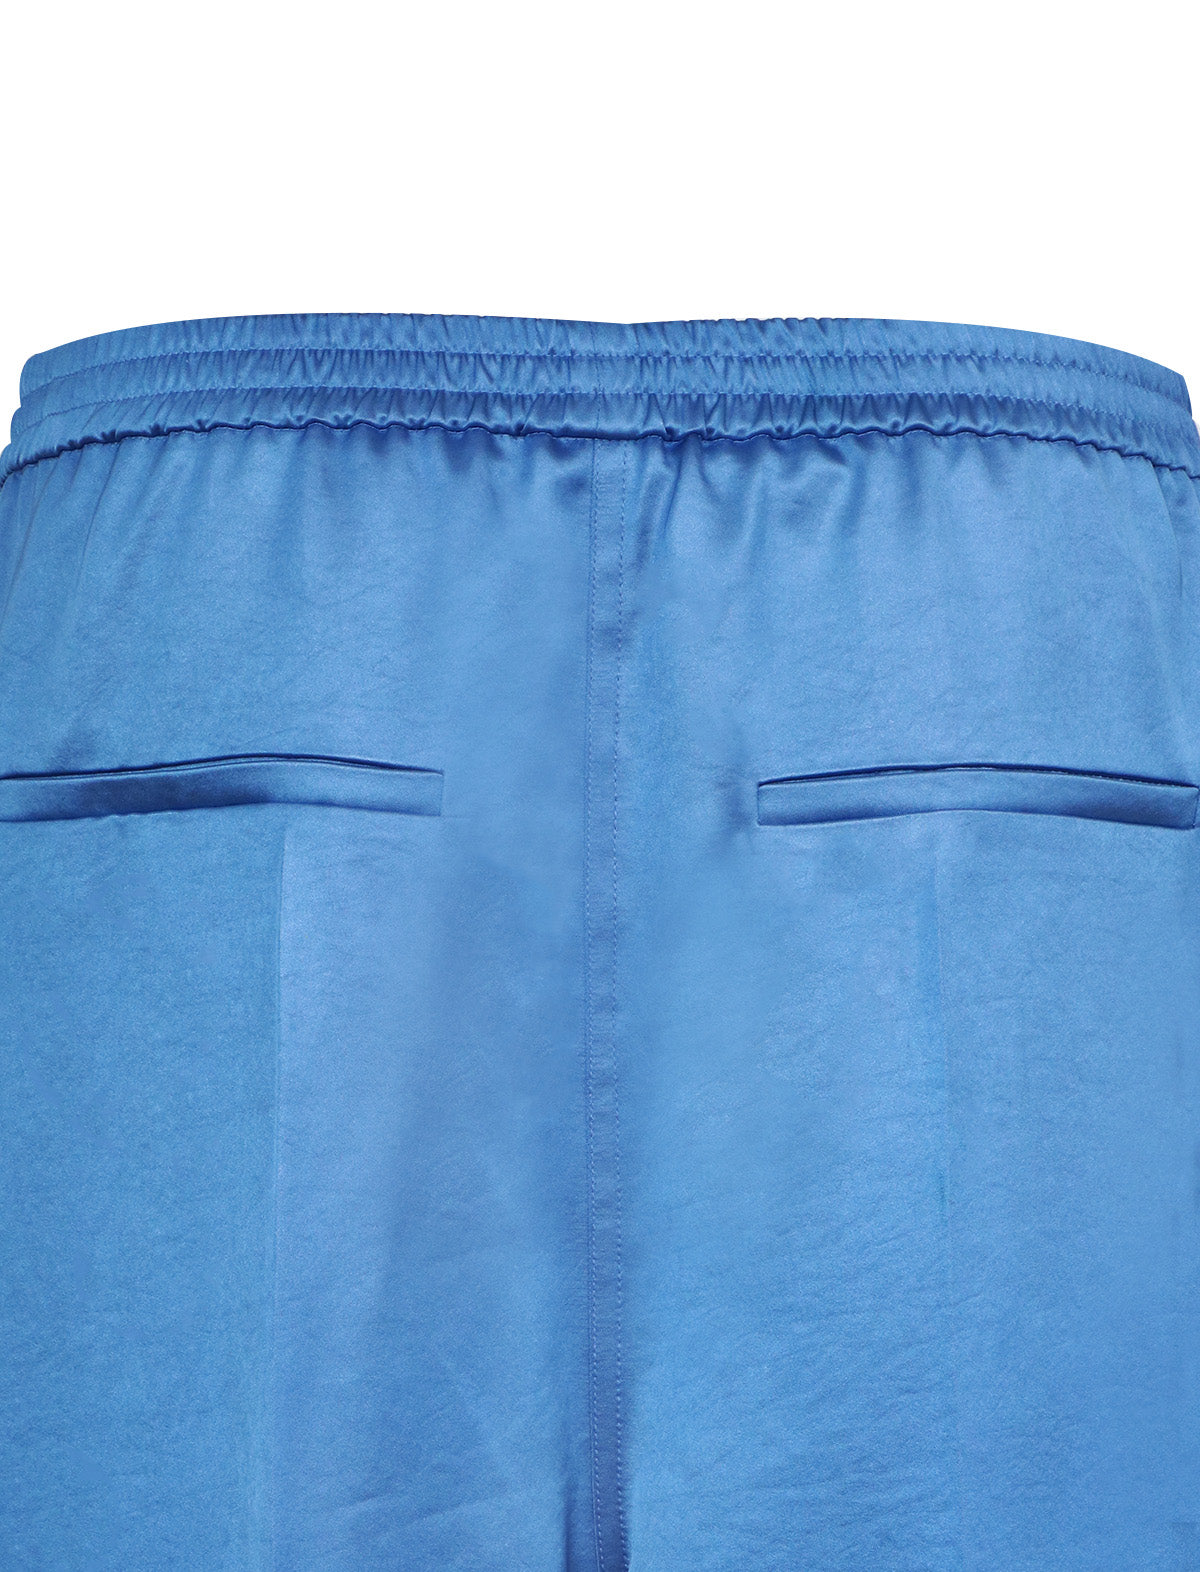 NANUSHKA Jolien Pants in Blue